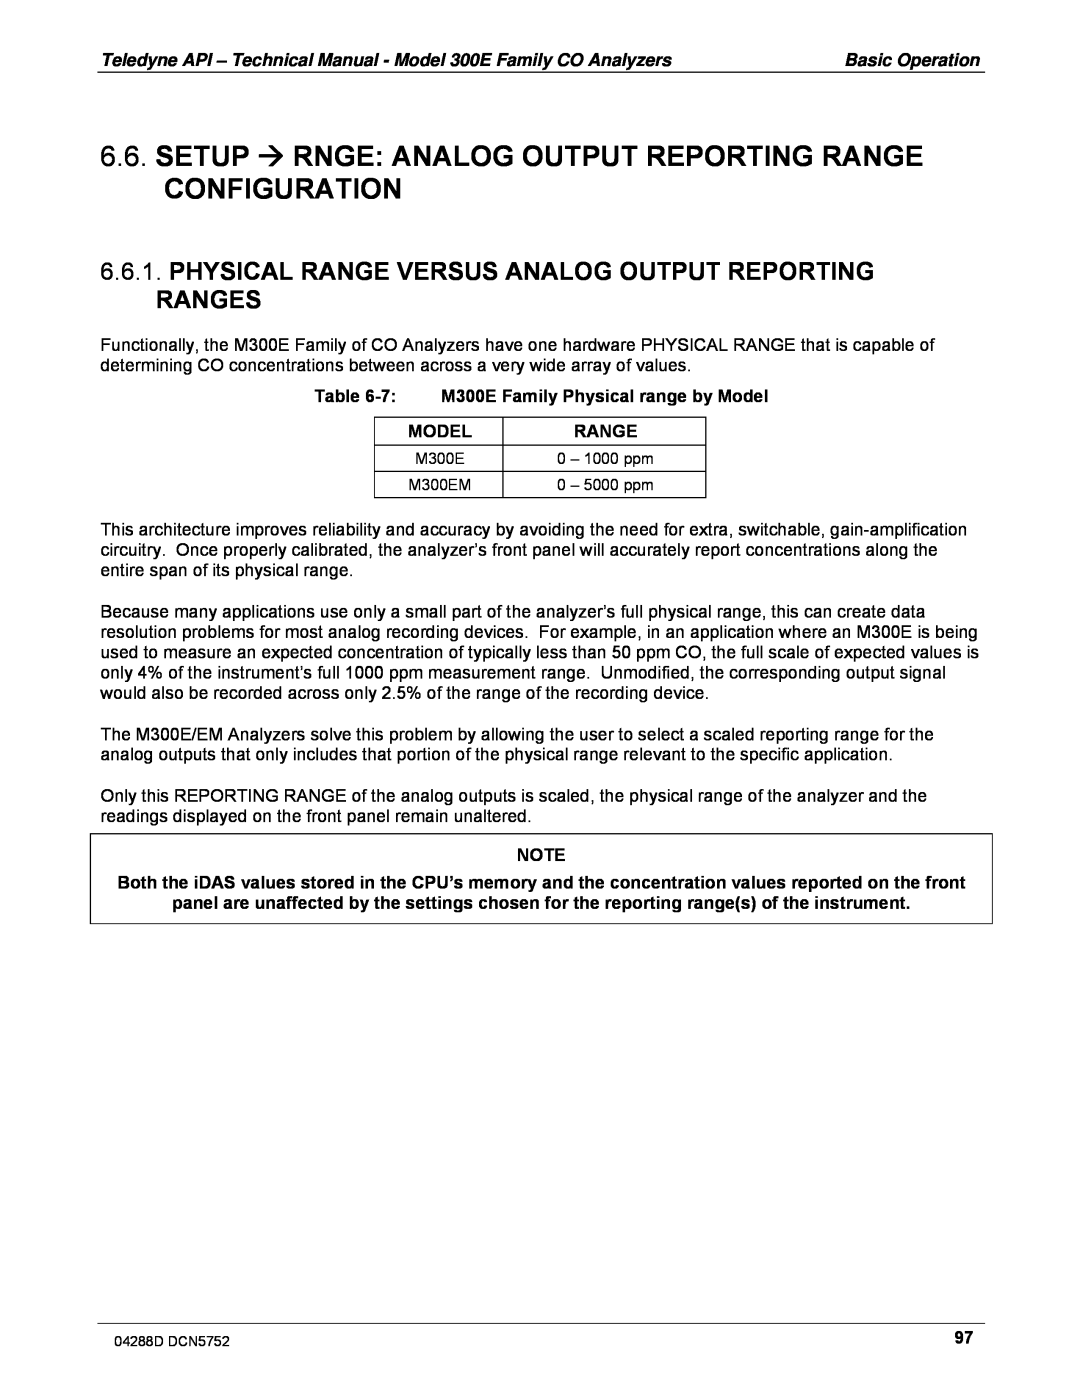 Teledyne operation manual 7:M300E Family Physical range by Model, Range, M300EM 